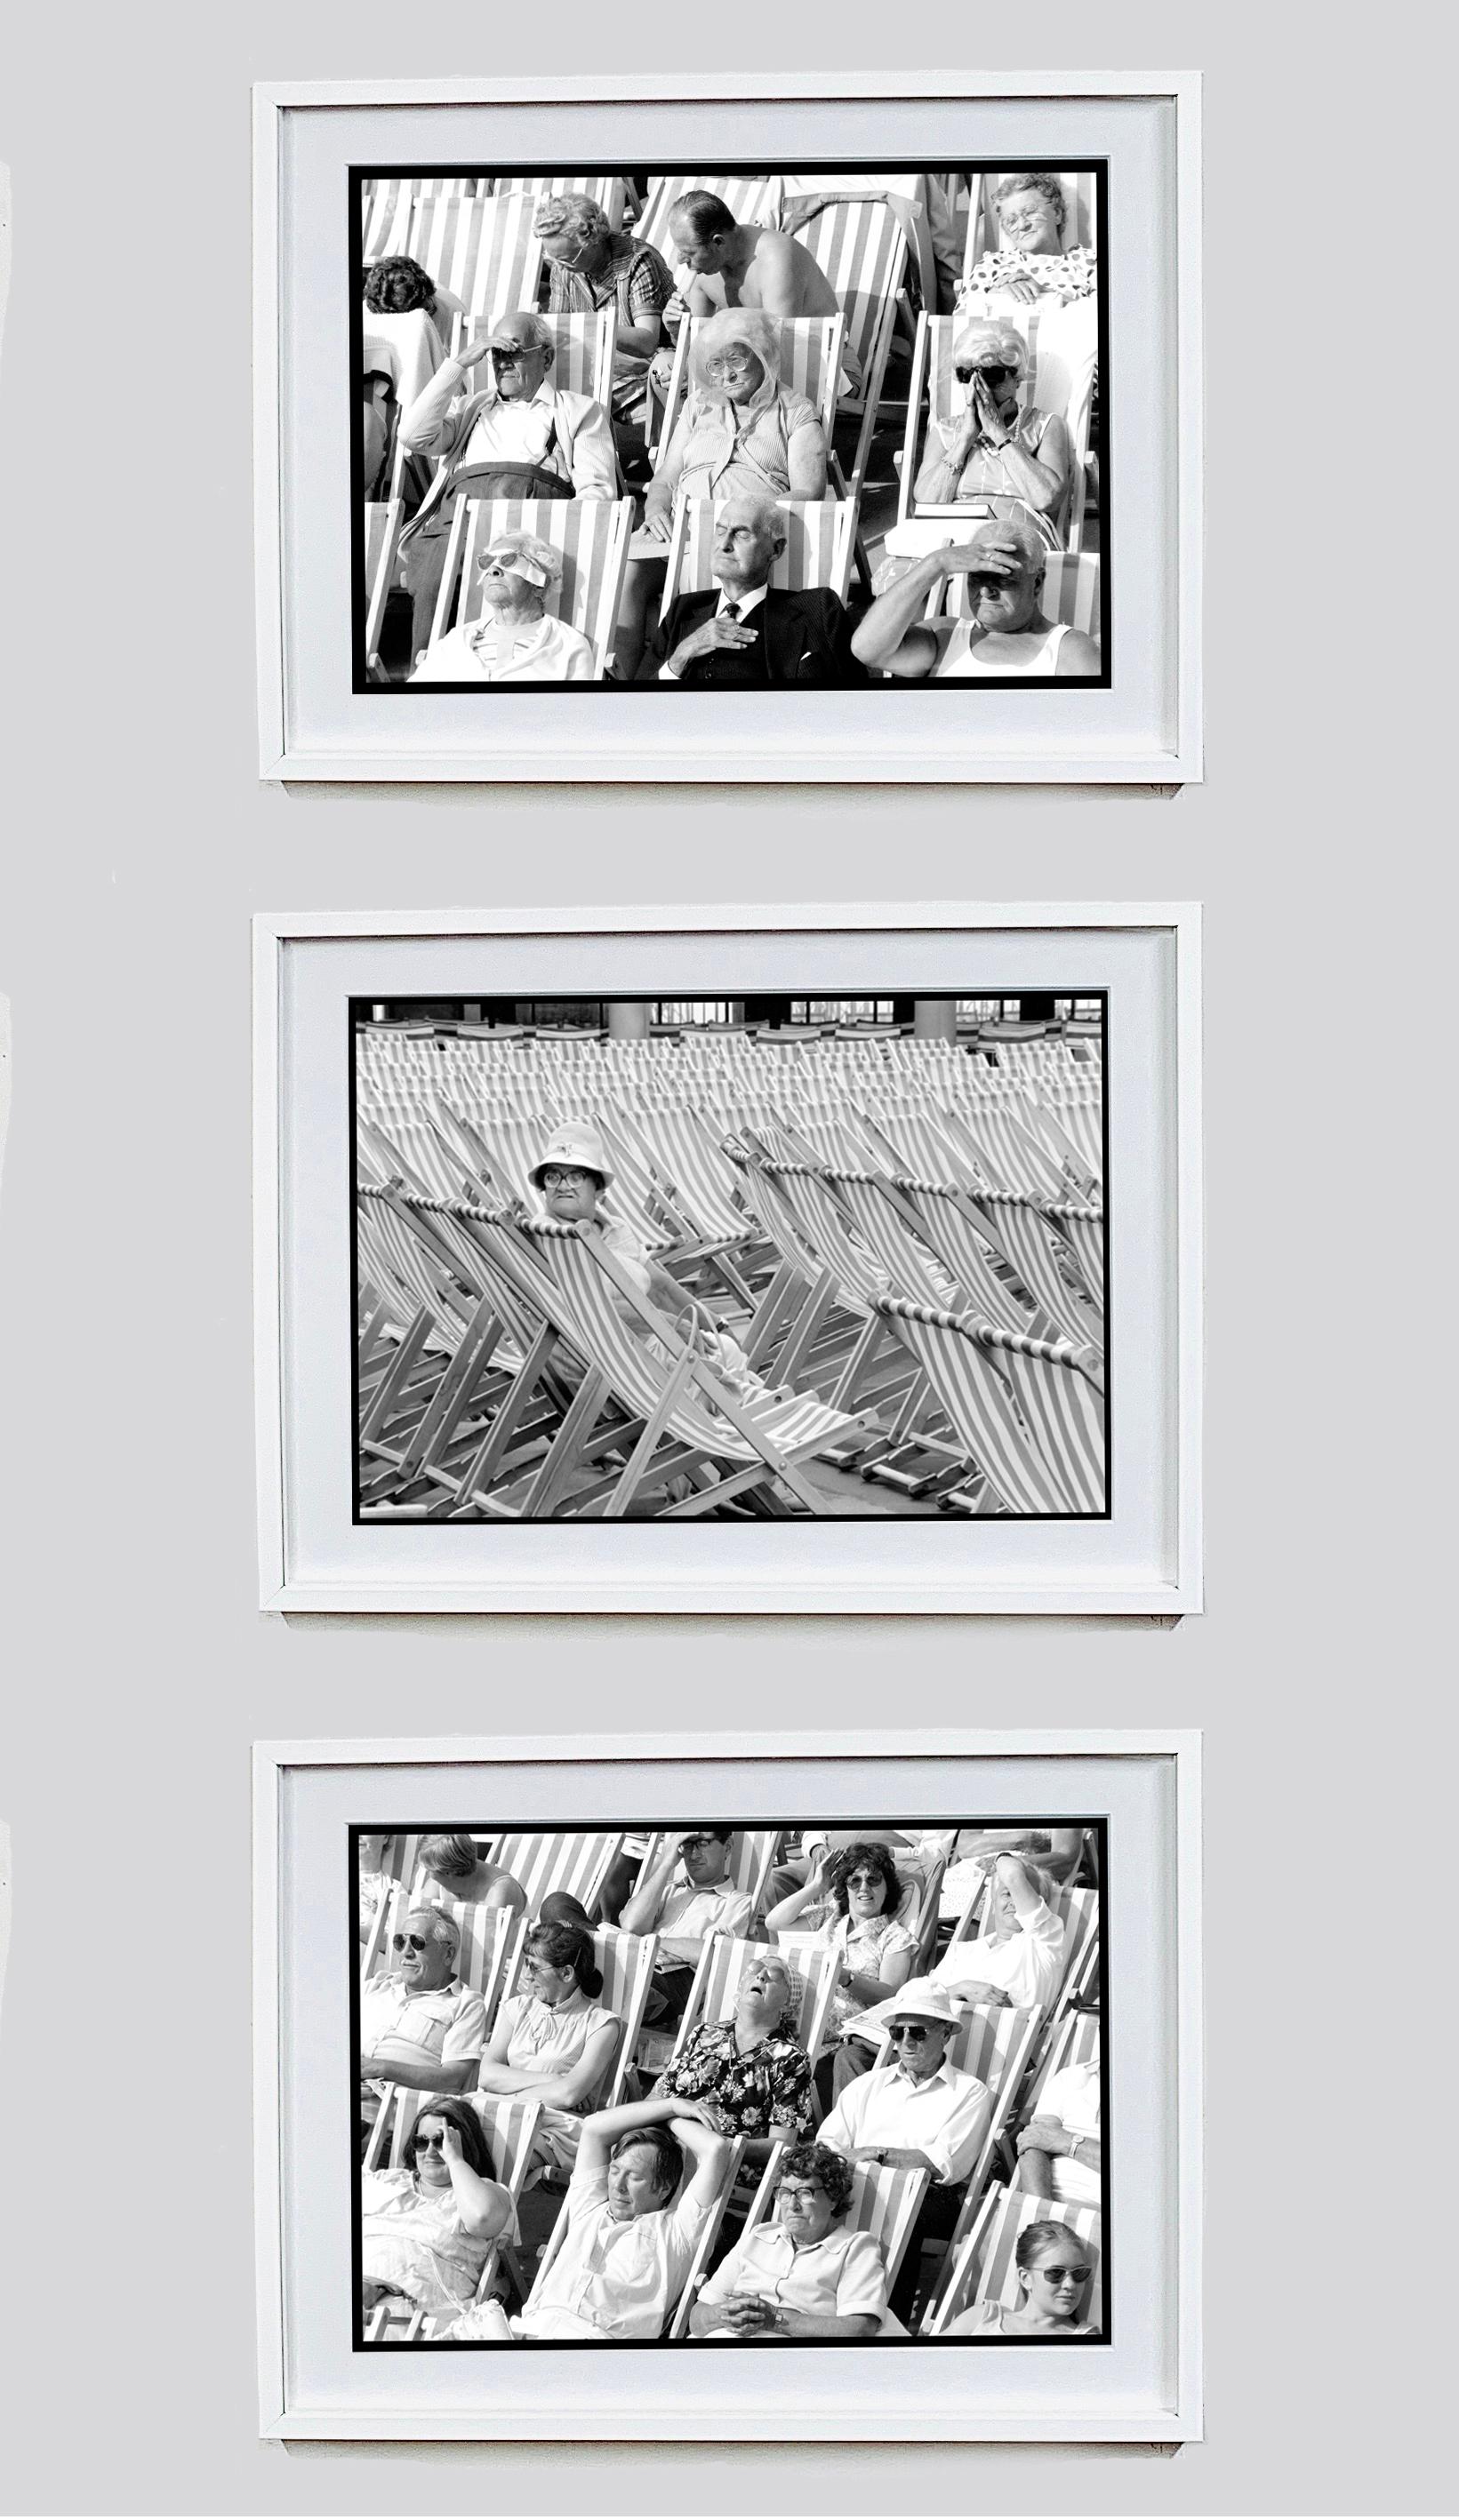 Bandstand I, Eastbourne, UK - Black and White Vintage Photography For Sale 5